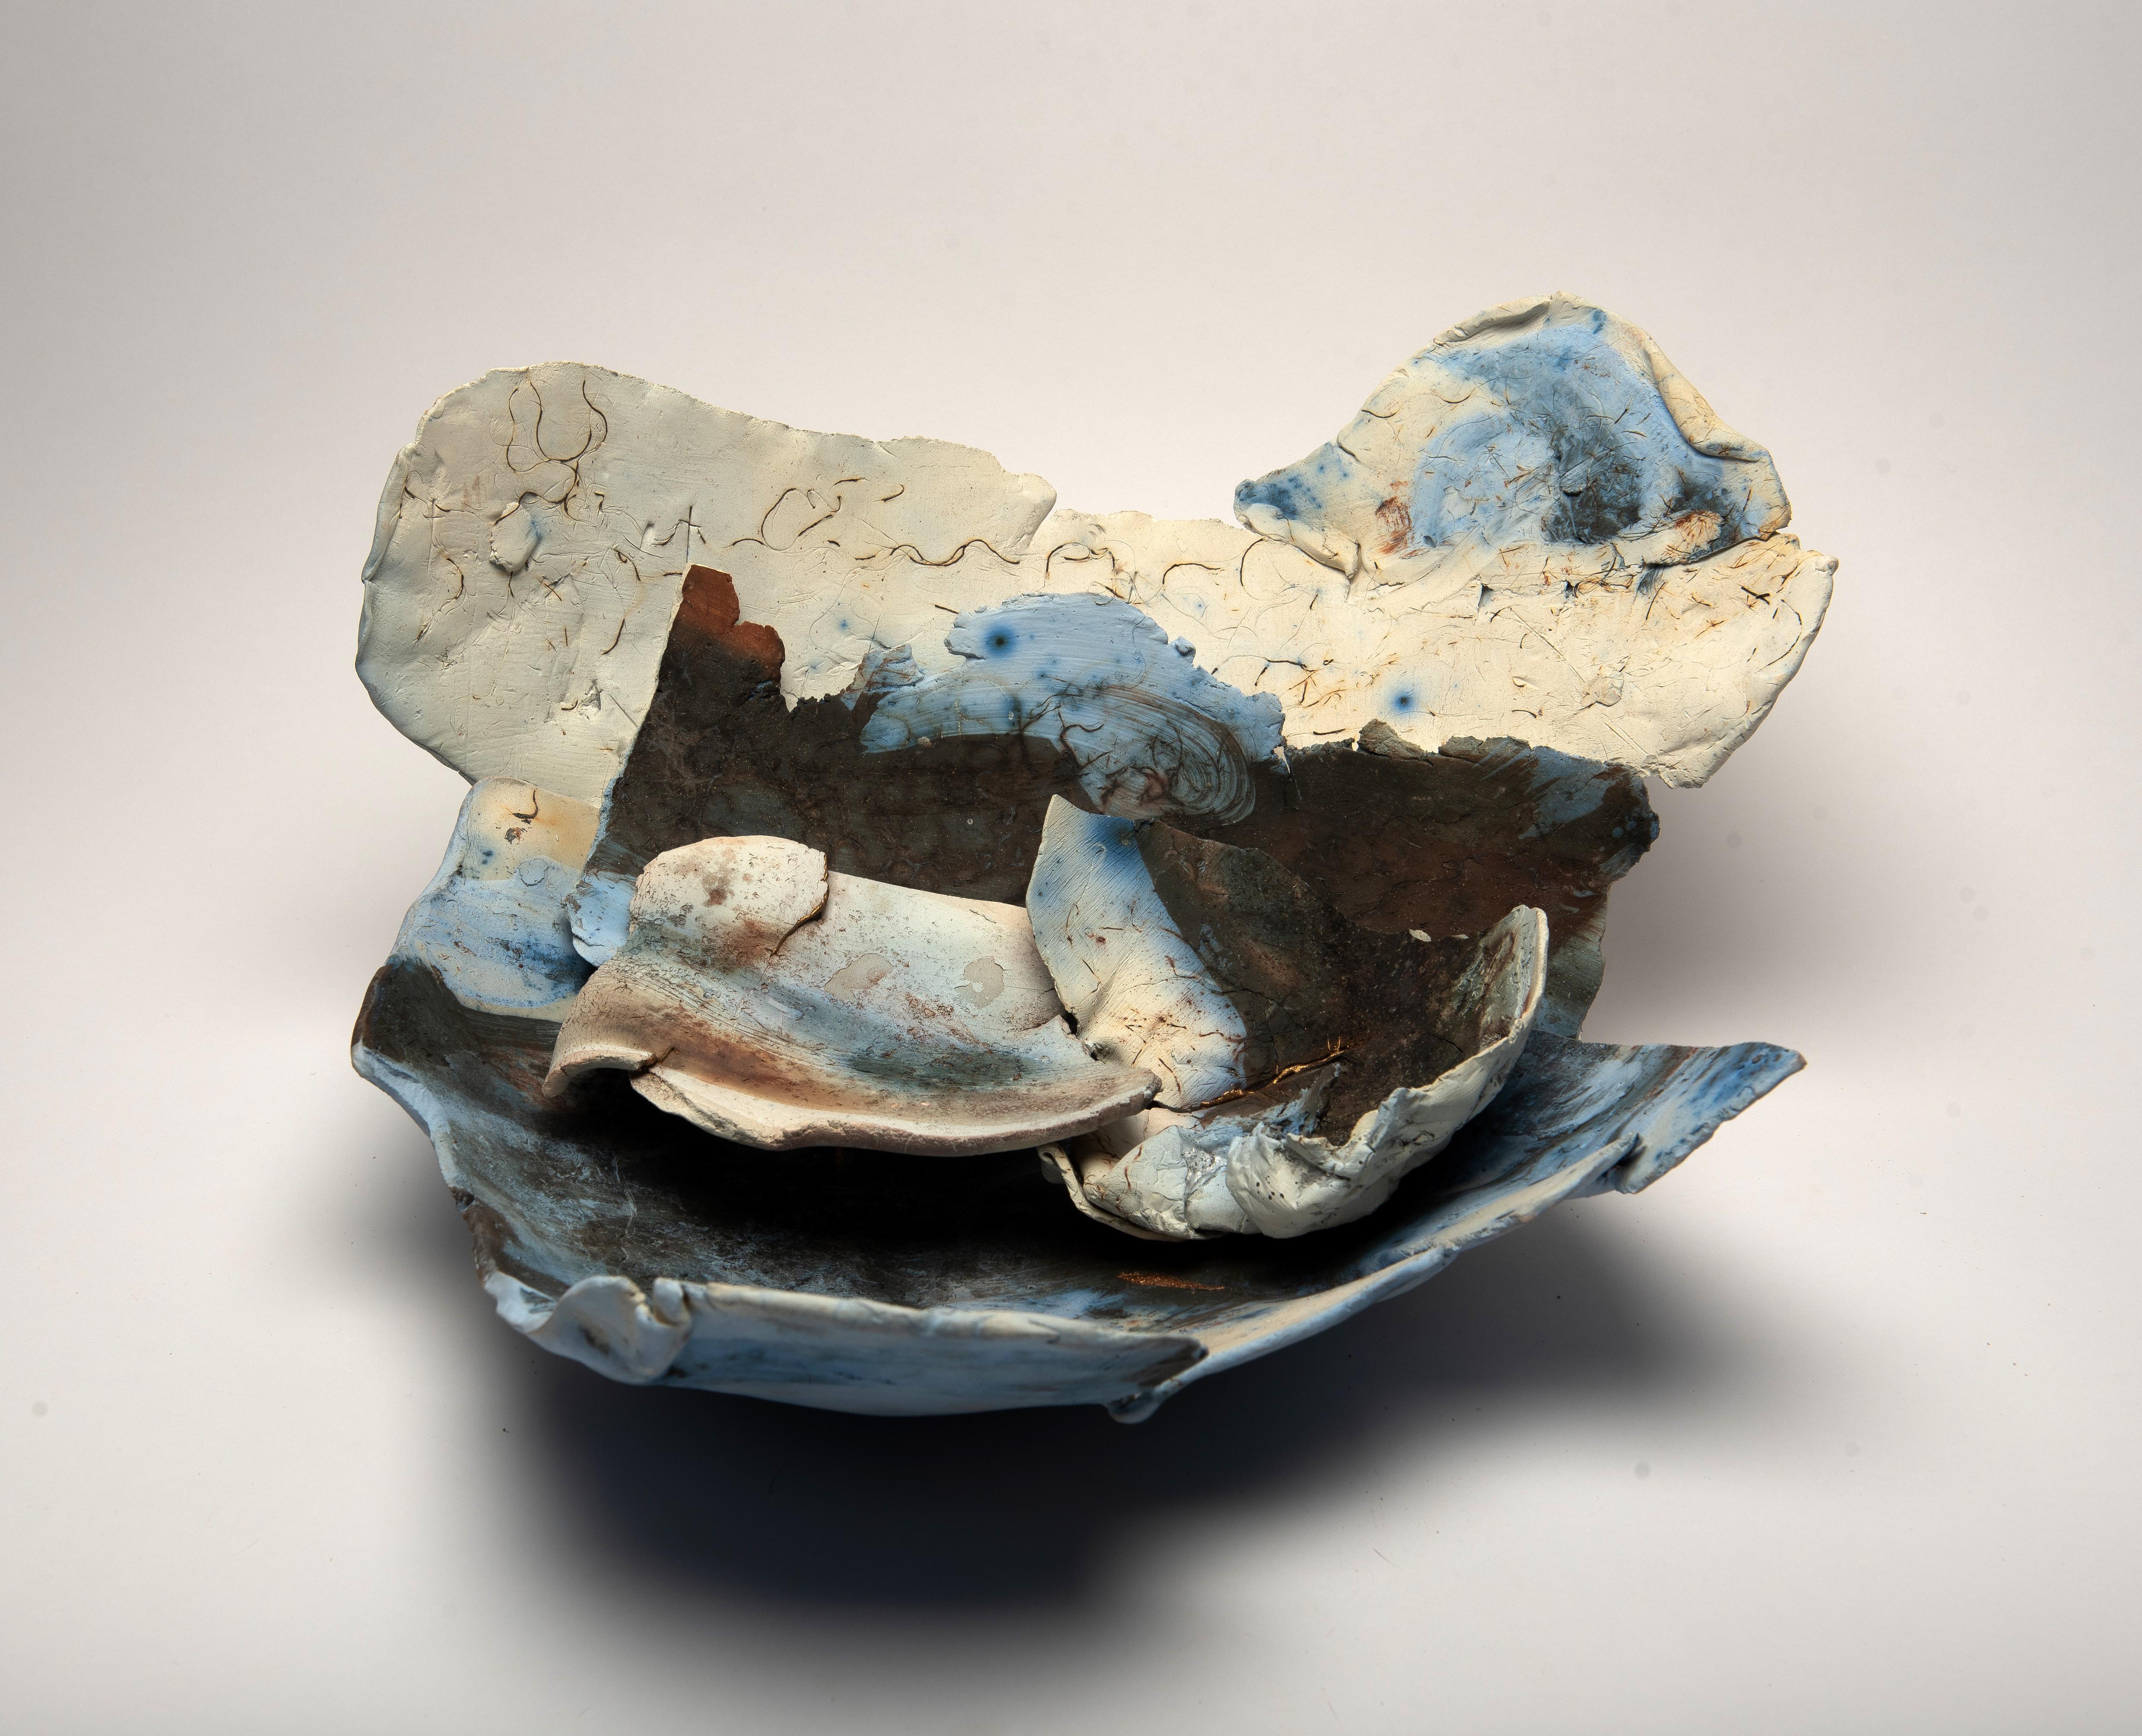 Alison Brannen Abstract Sculpture - "Midnight Over Mountains", ceramic sculpture, porcelain shards, blue, copper